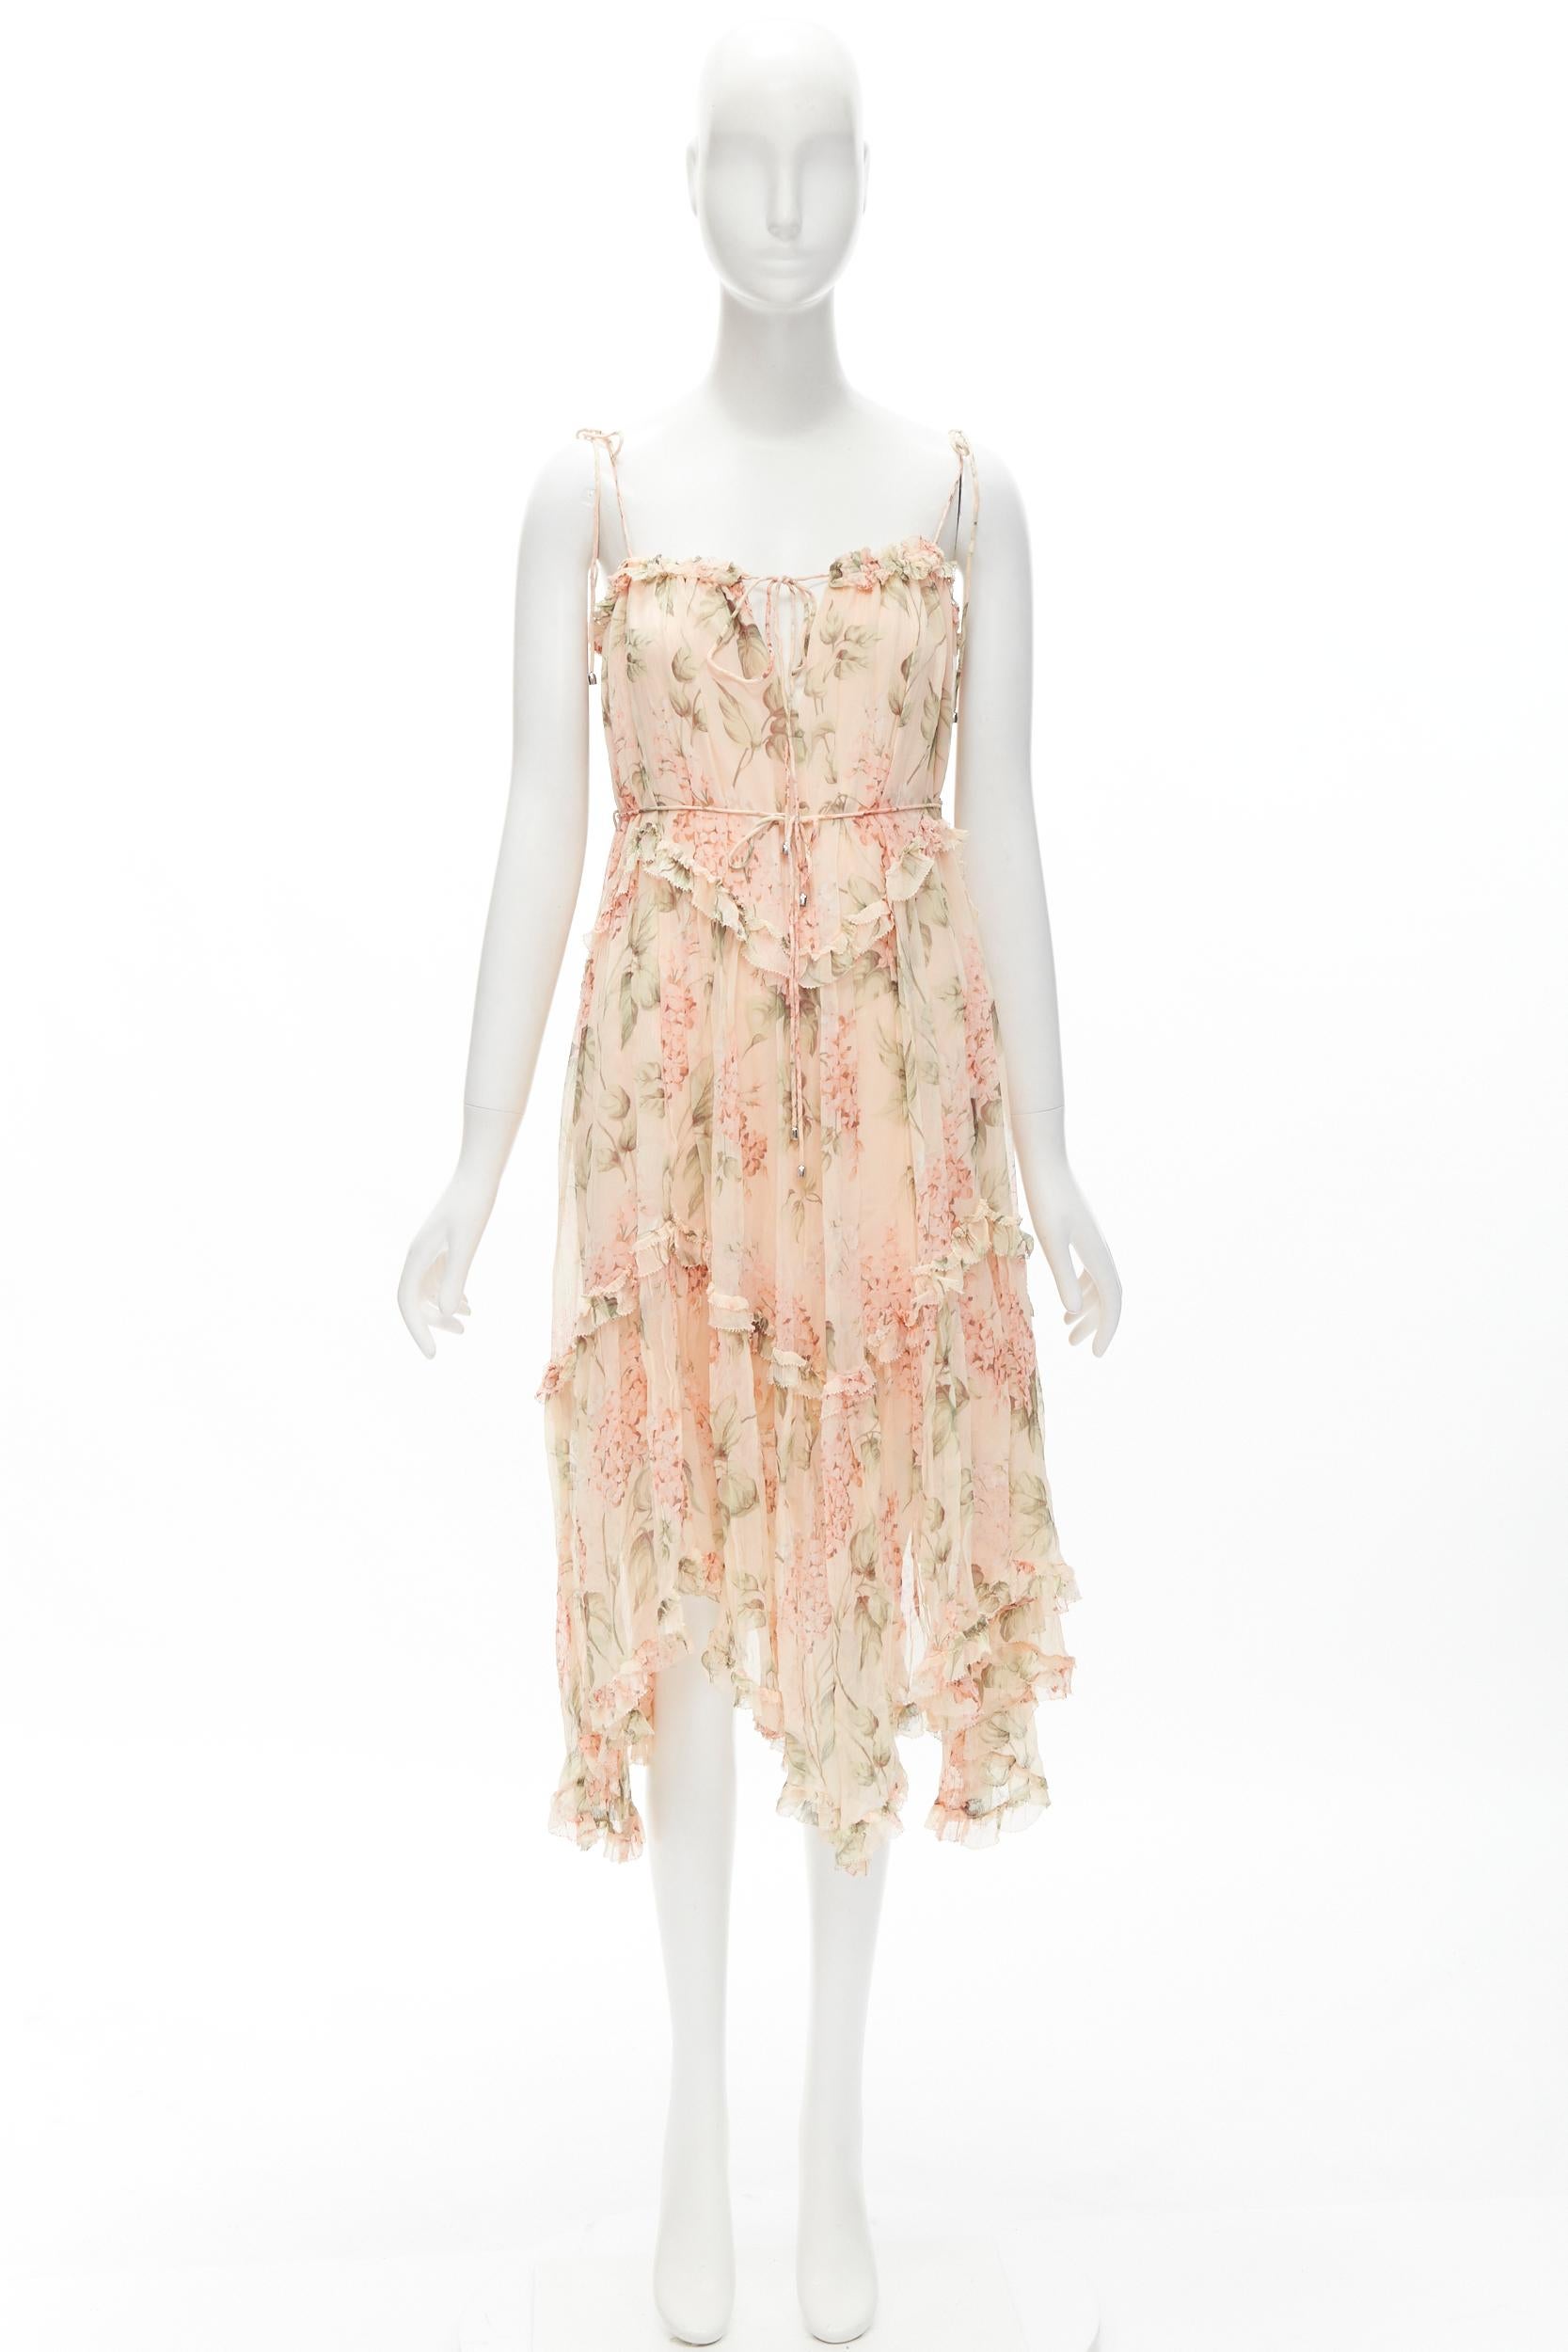 ZIMMERMANN 100% silk blush pink floral print ruffle trim summer dress Sz.1 S For Sale 3